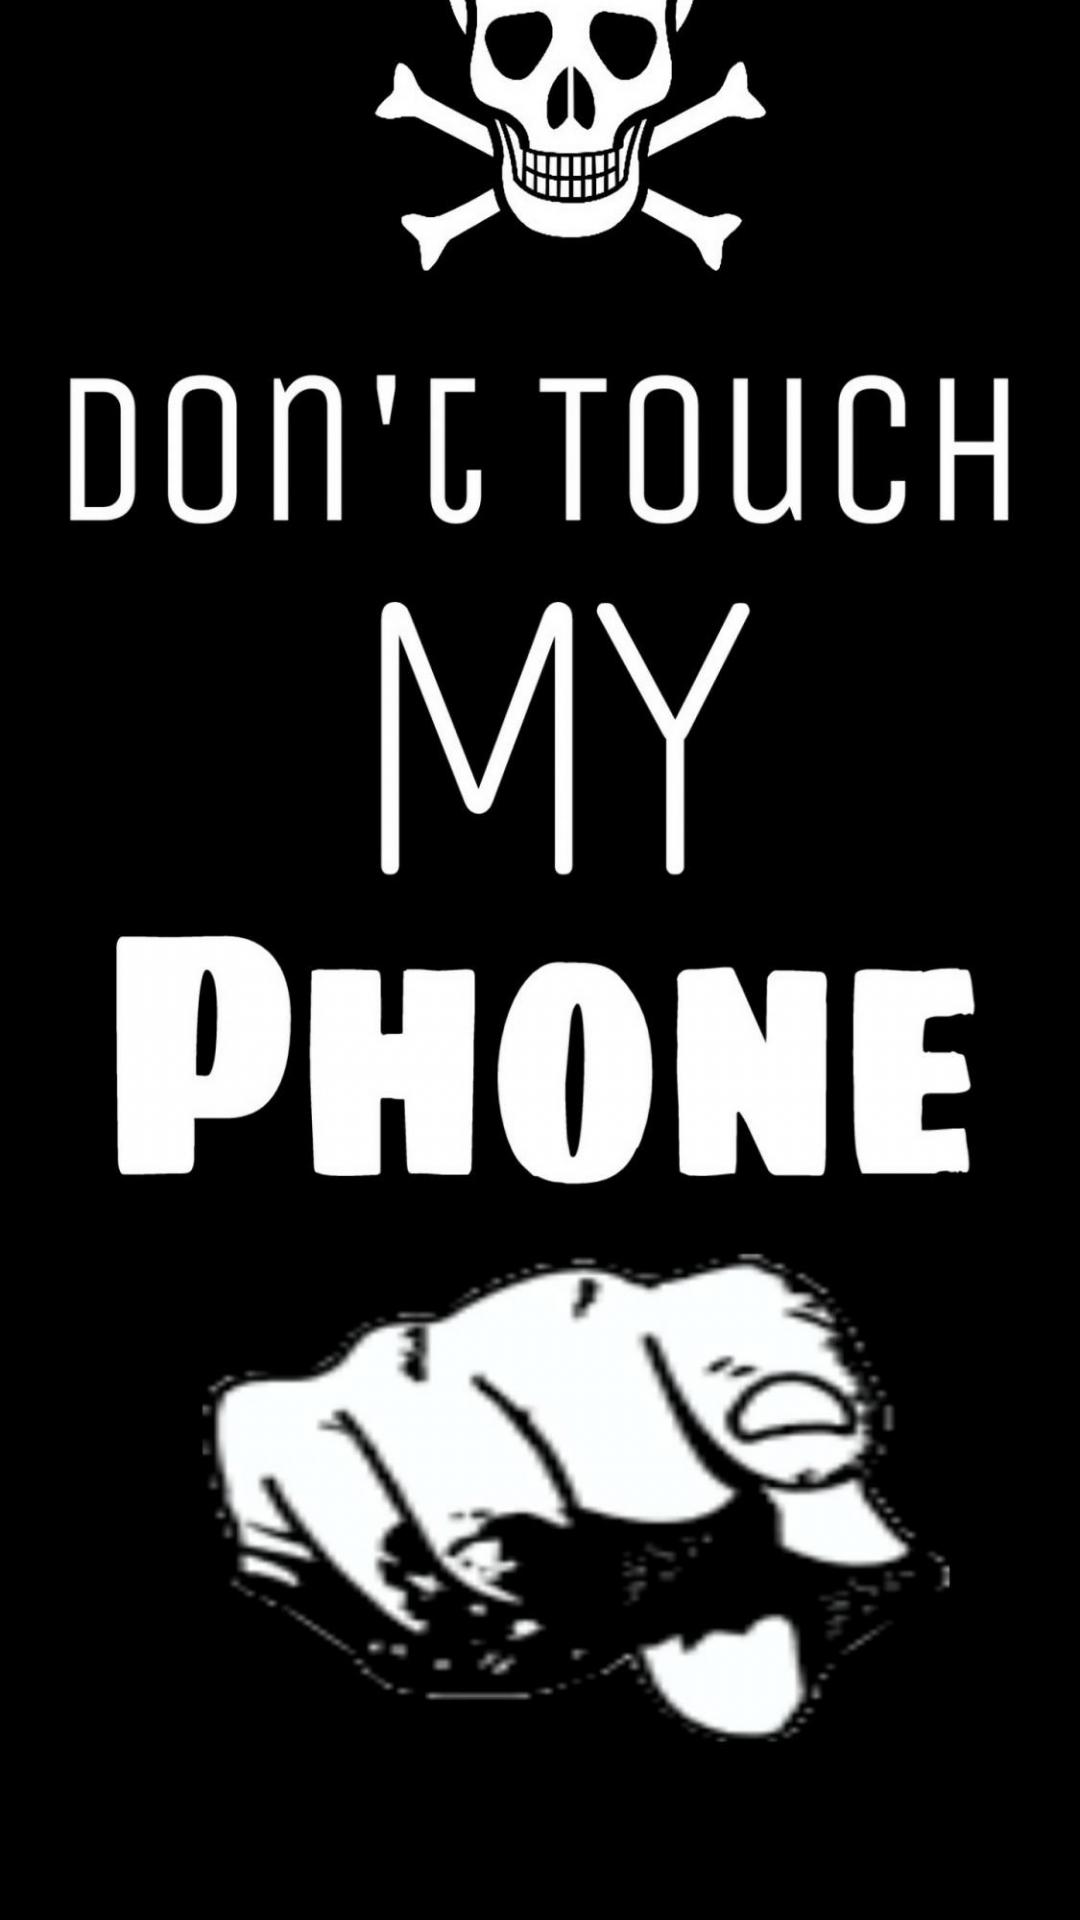 картинки на телефон телефон не трогать